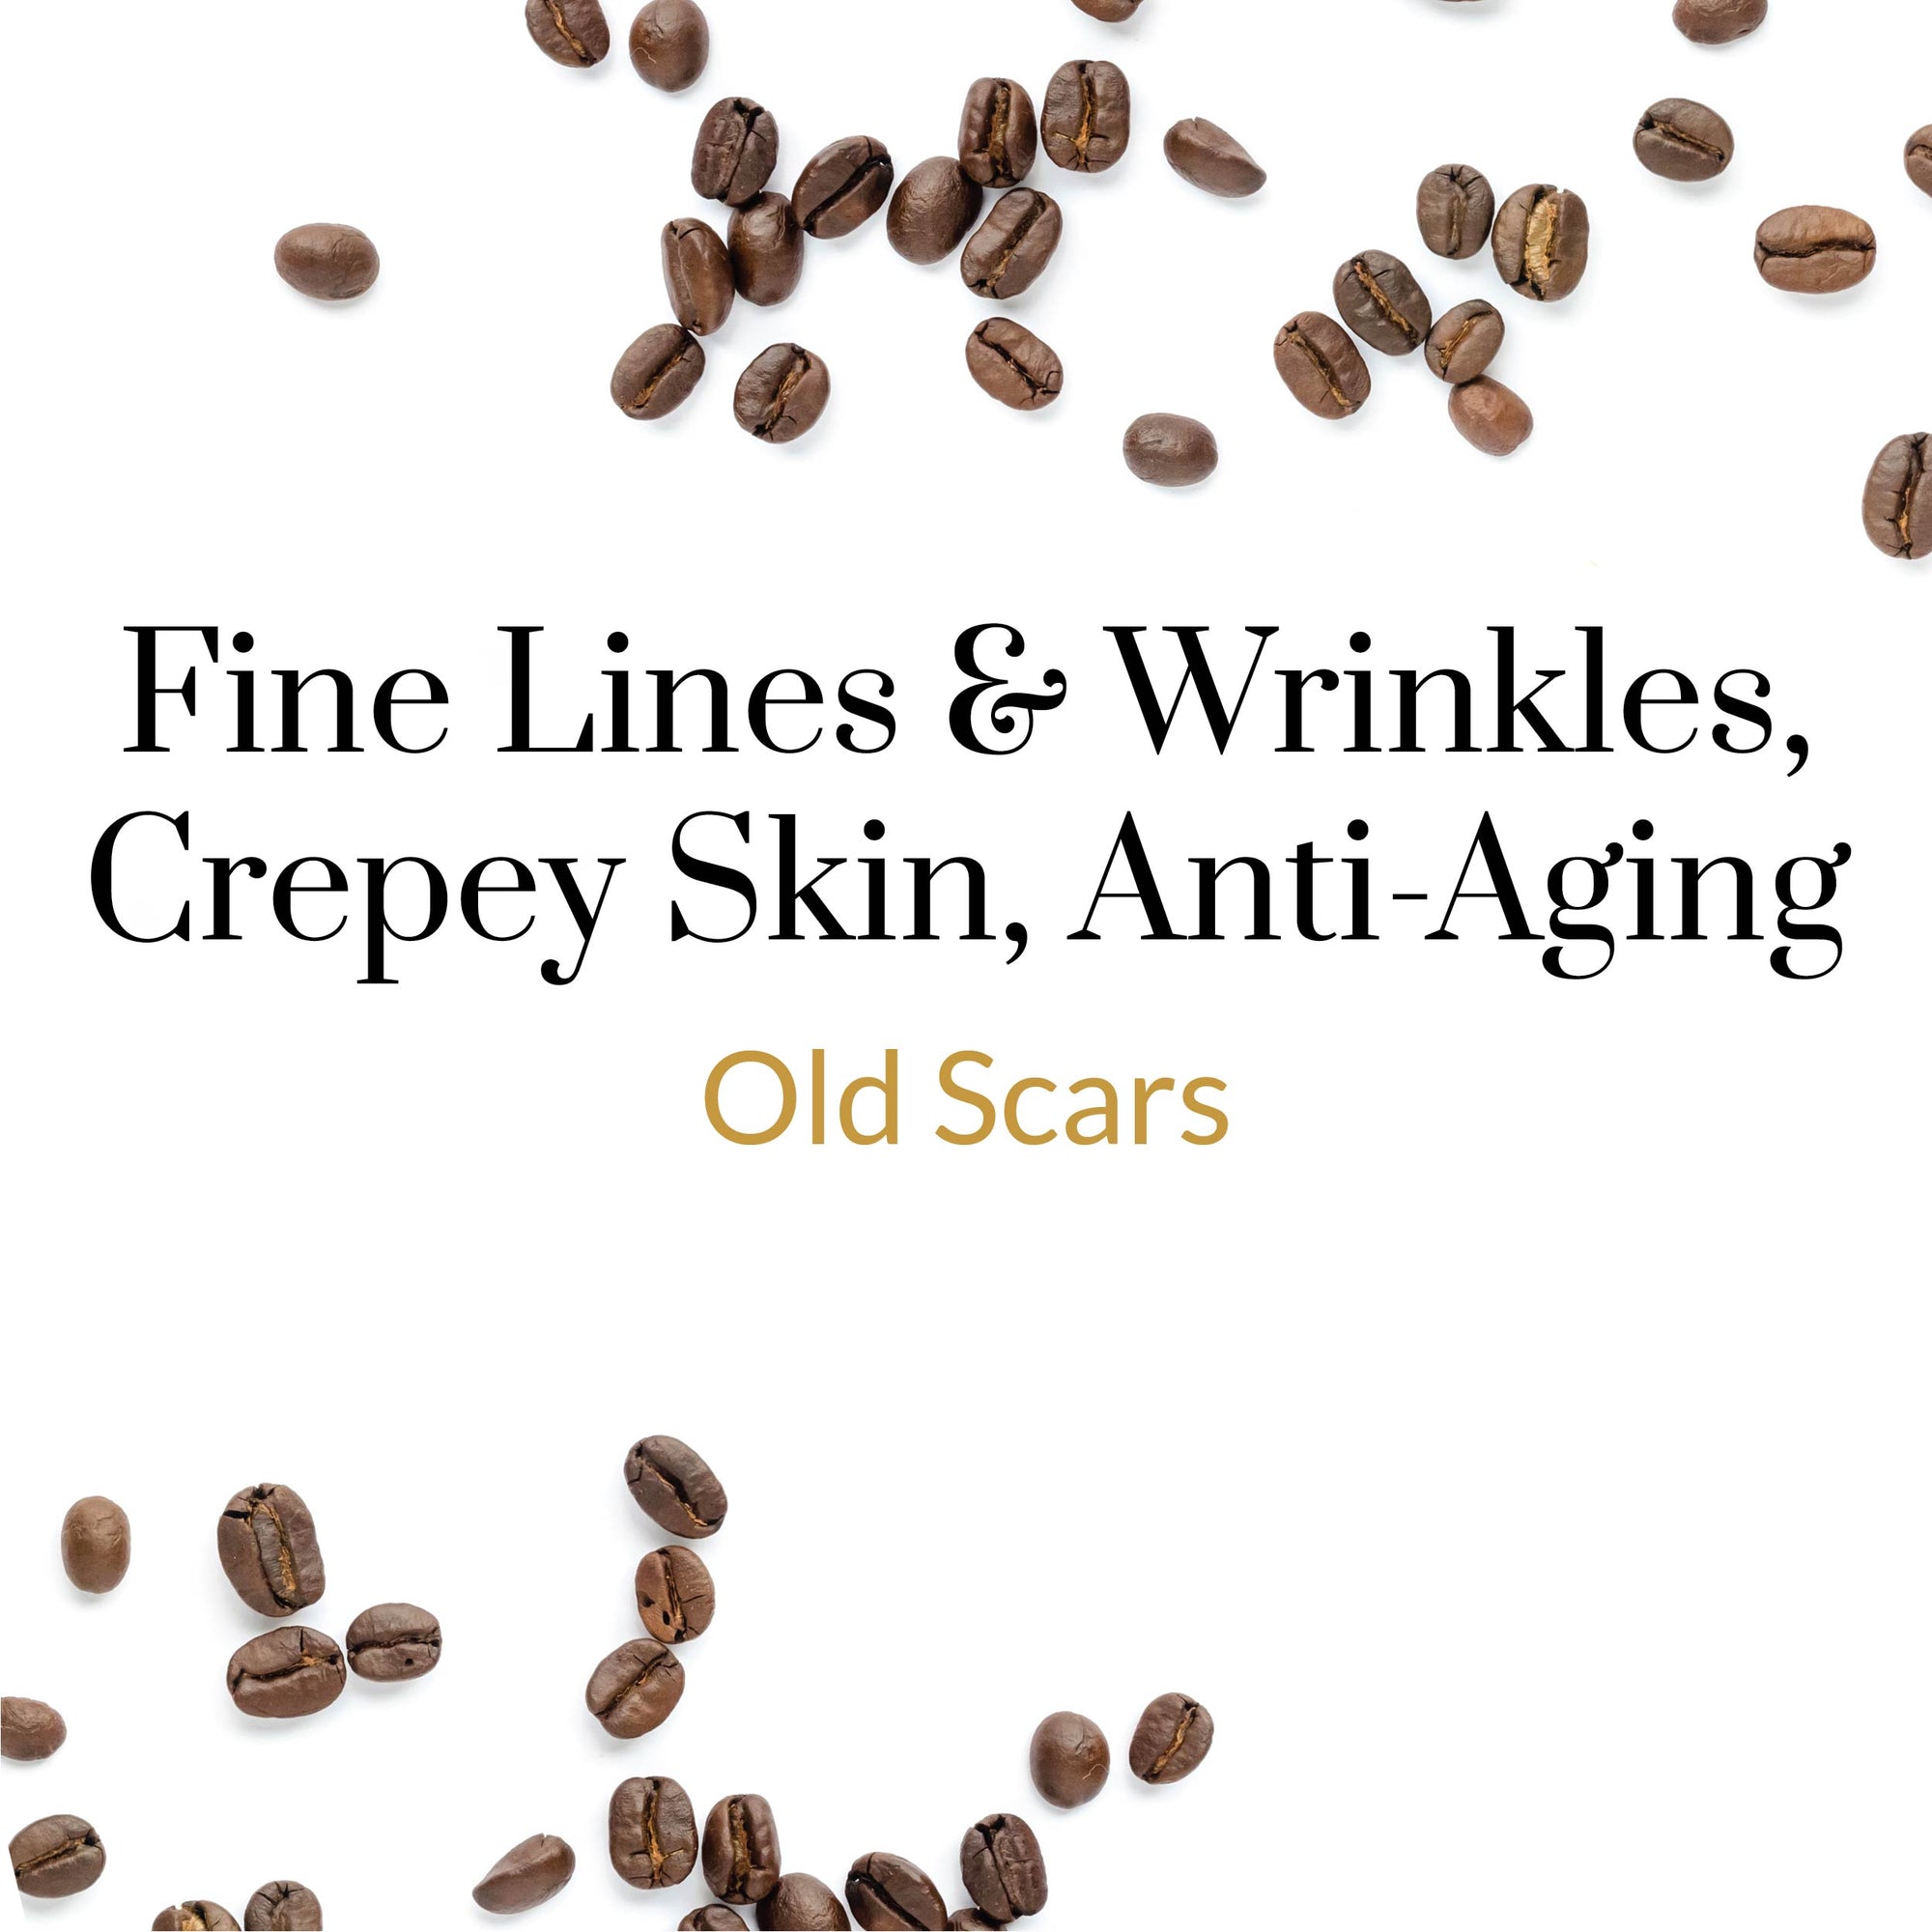 Old Scars - Fine Lines & Wrinkles, Crepey Skin, Anti-Aging